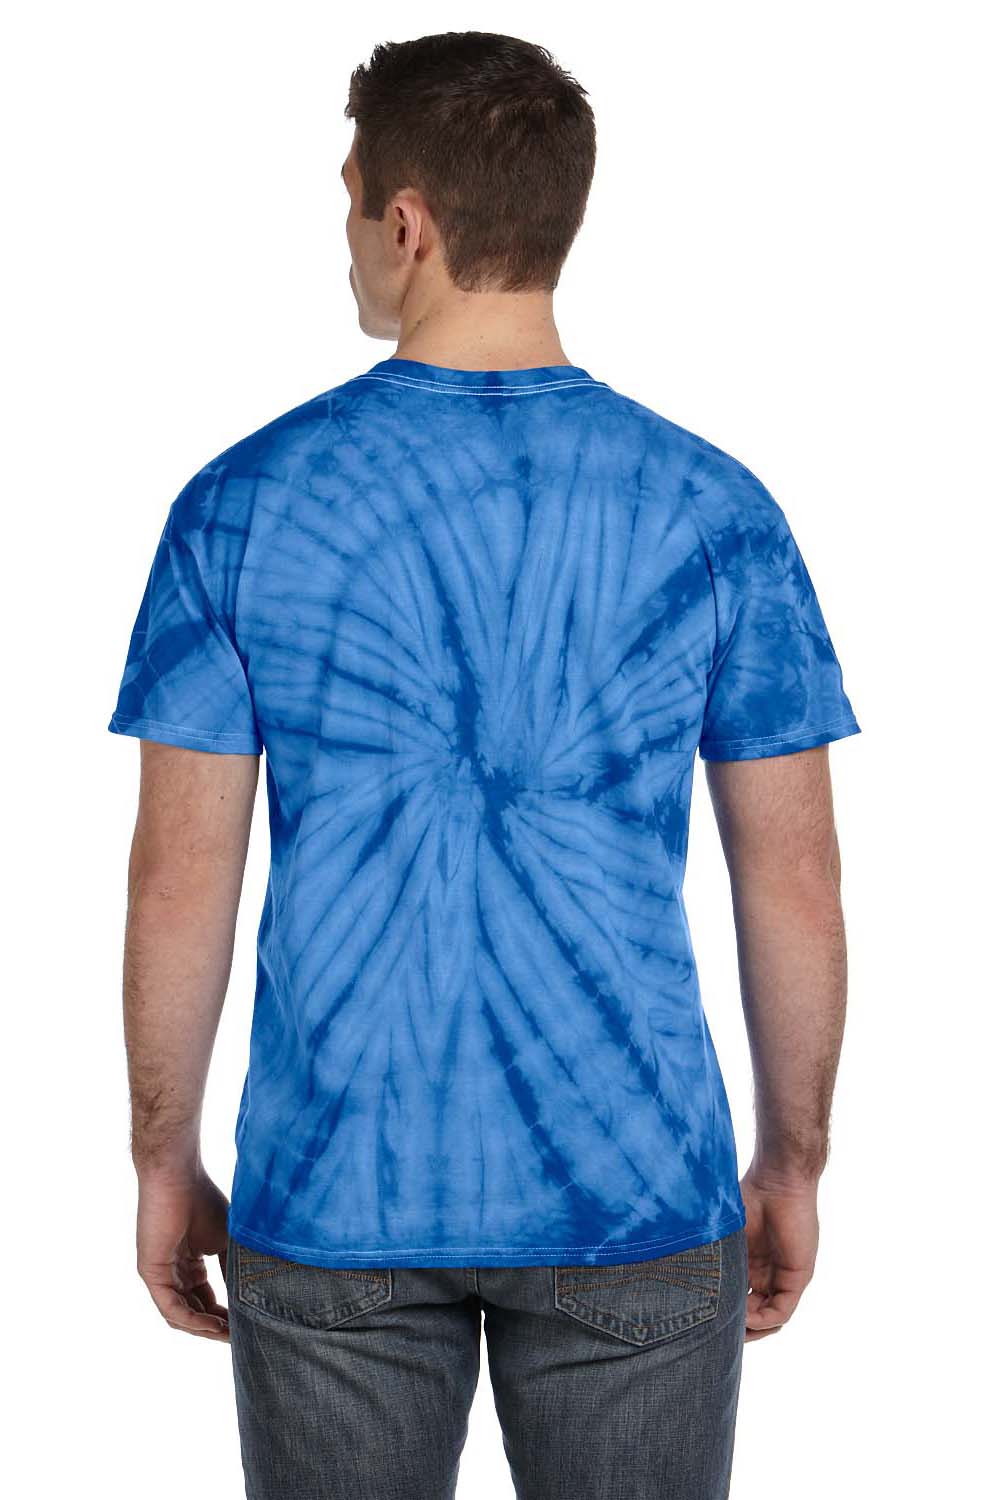 Tie-Dye CD101 Mens Short Sleeve Crewneck T-Shirt Royal Blue Back